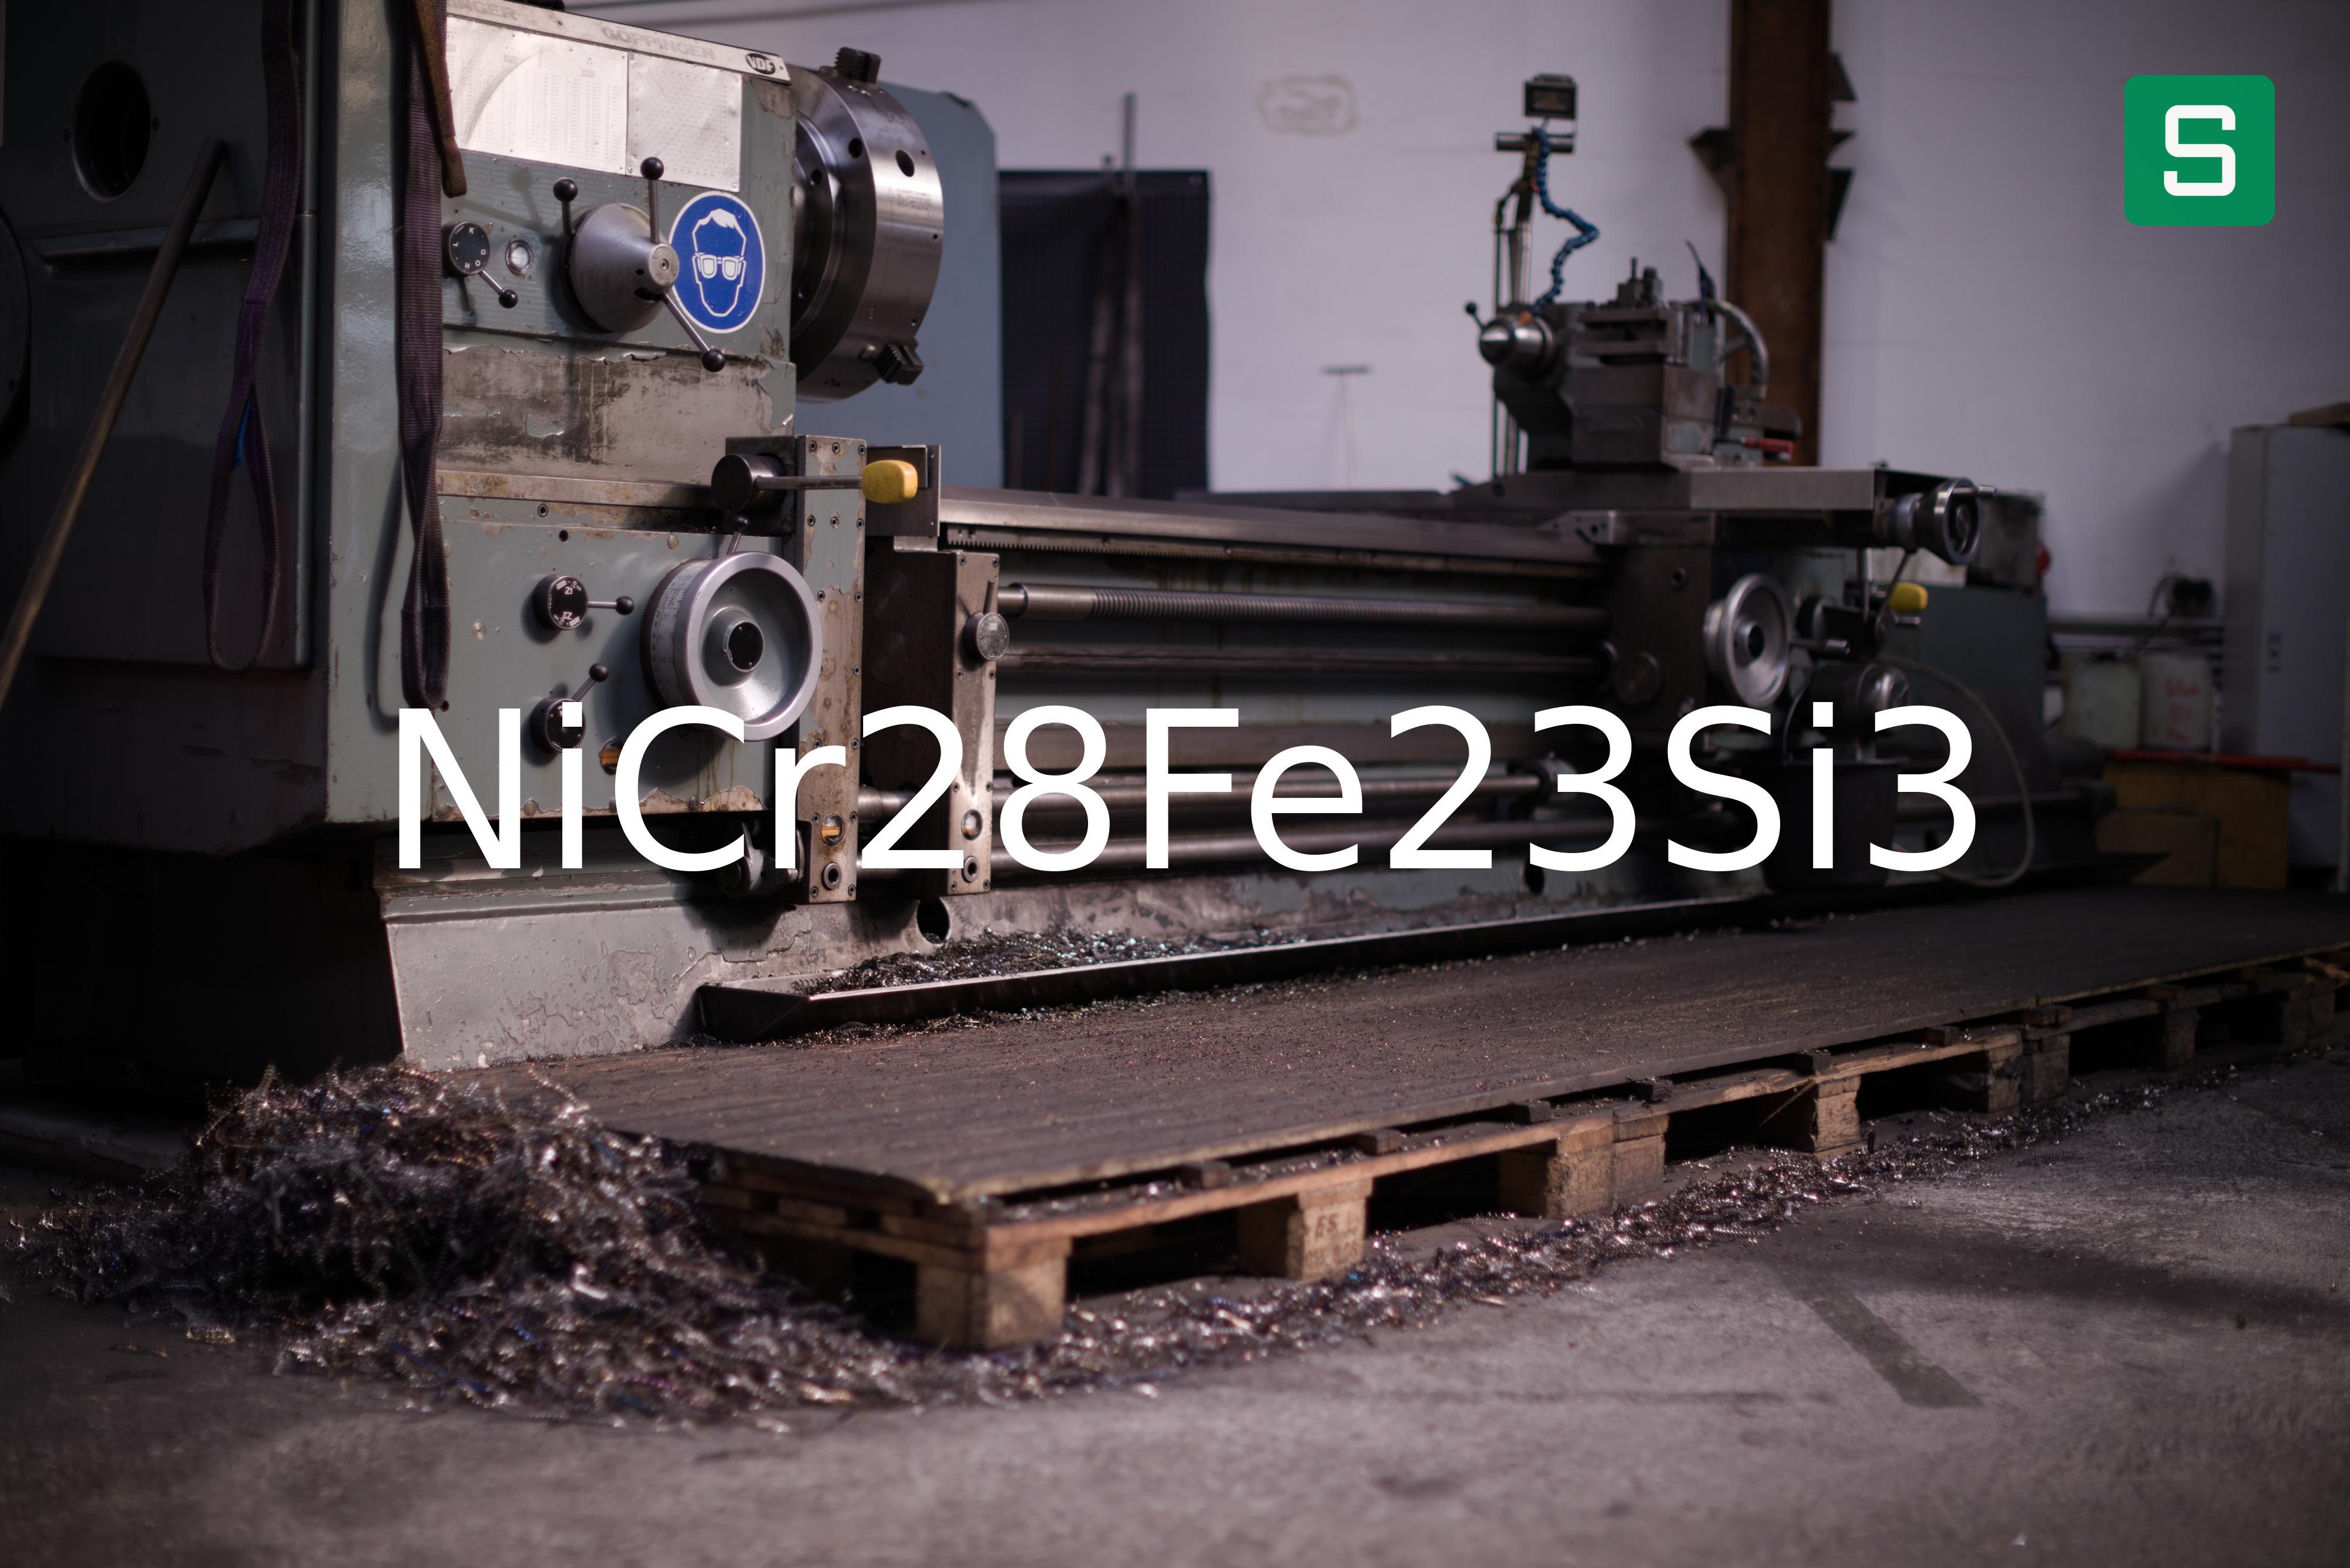 Steel Material: NiCr28Fe23Si3